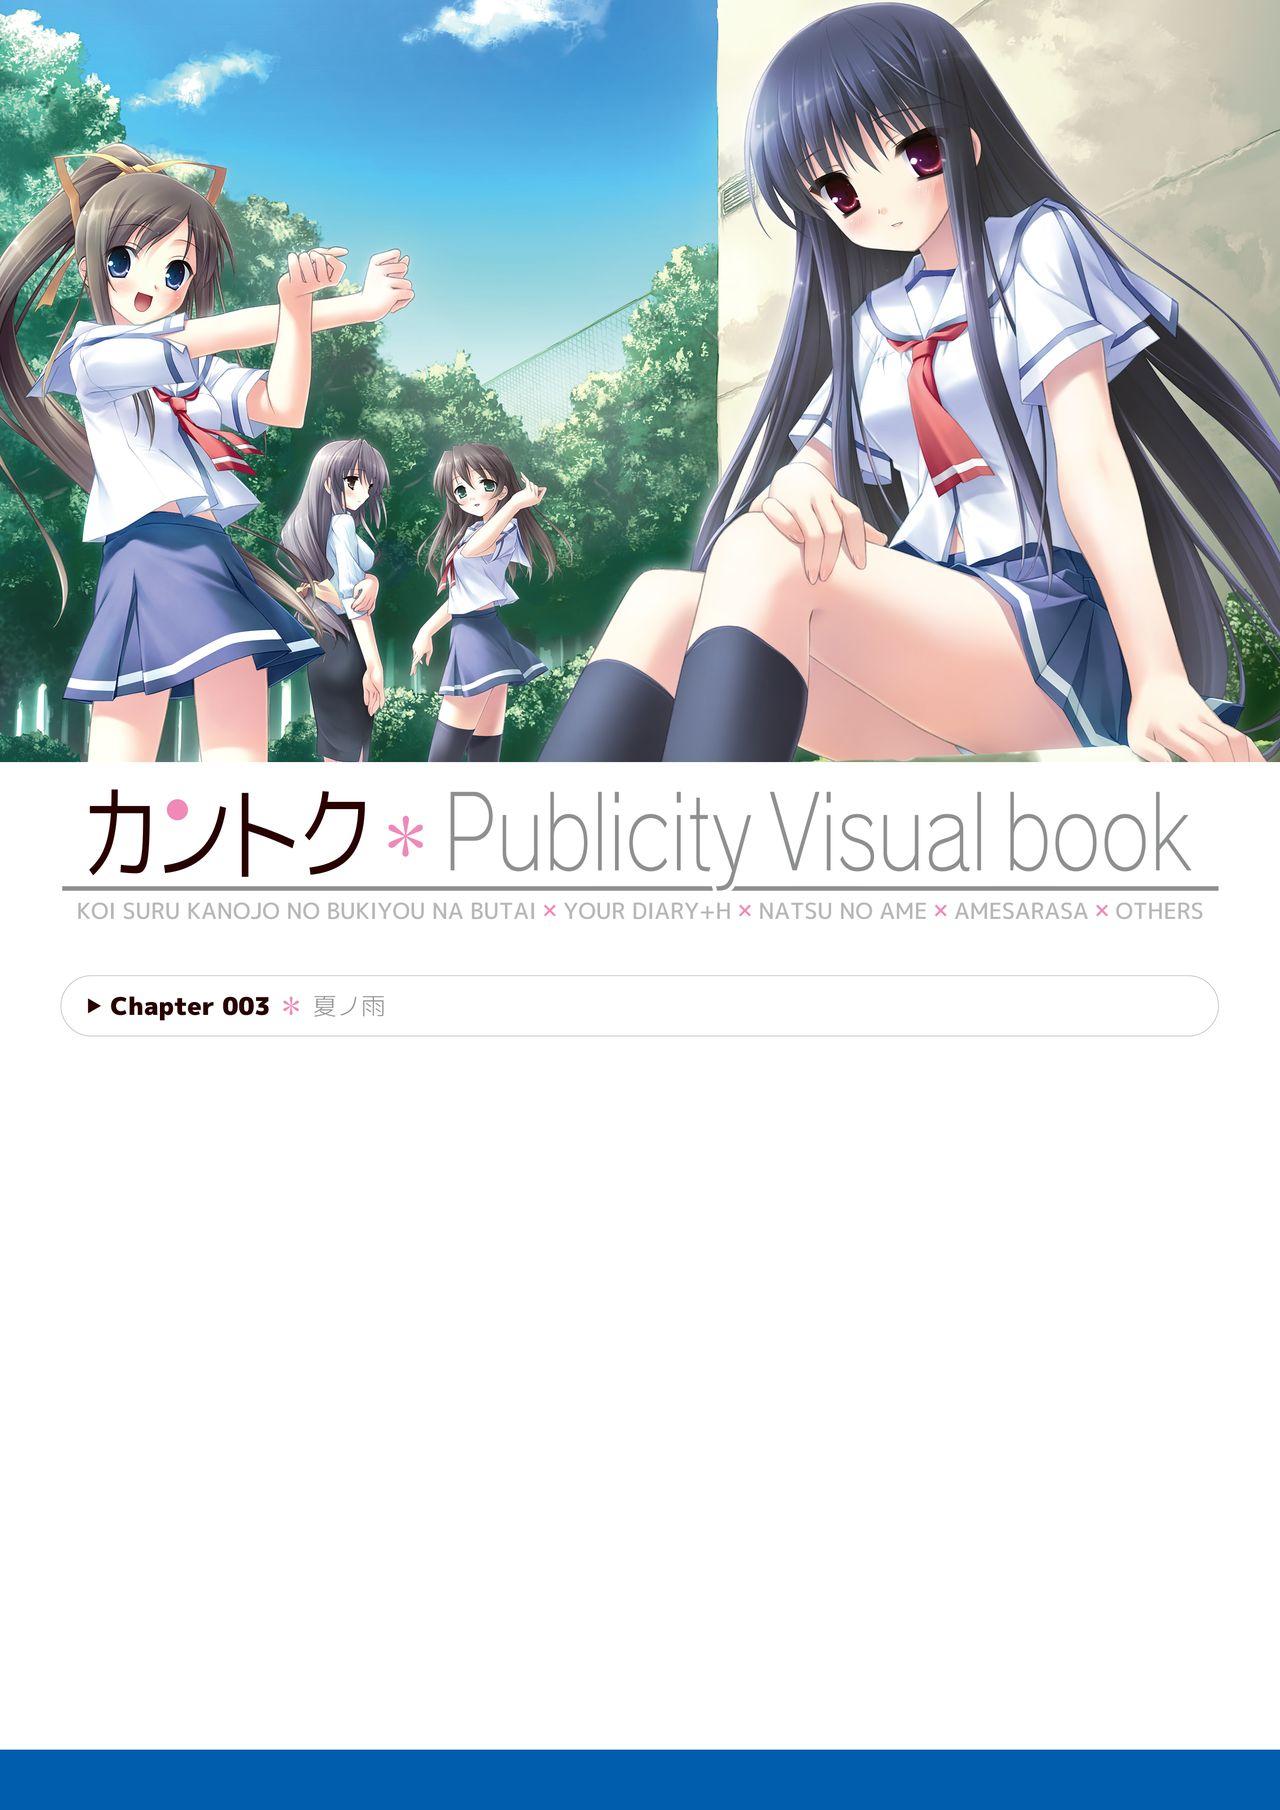 Kantoku Publicity Visual book 121